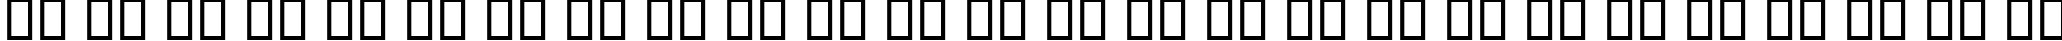 Пример написания английского алфавита шрифтом B Nikoo Italic